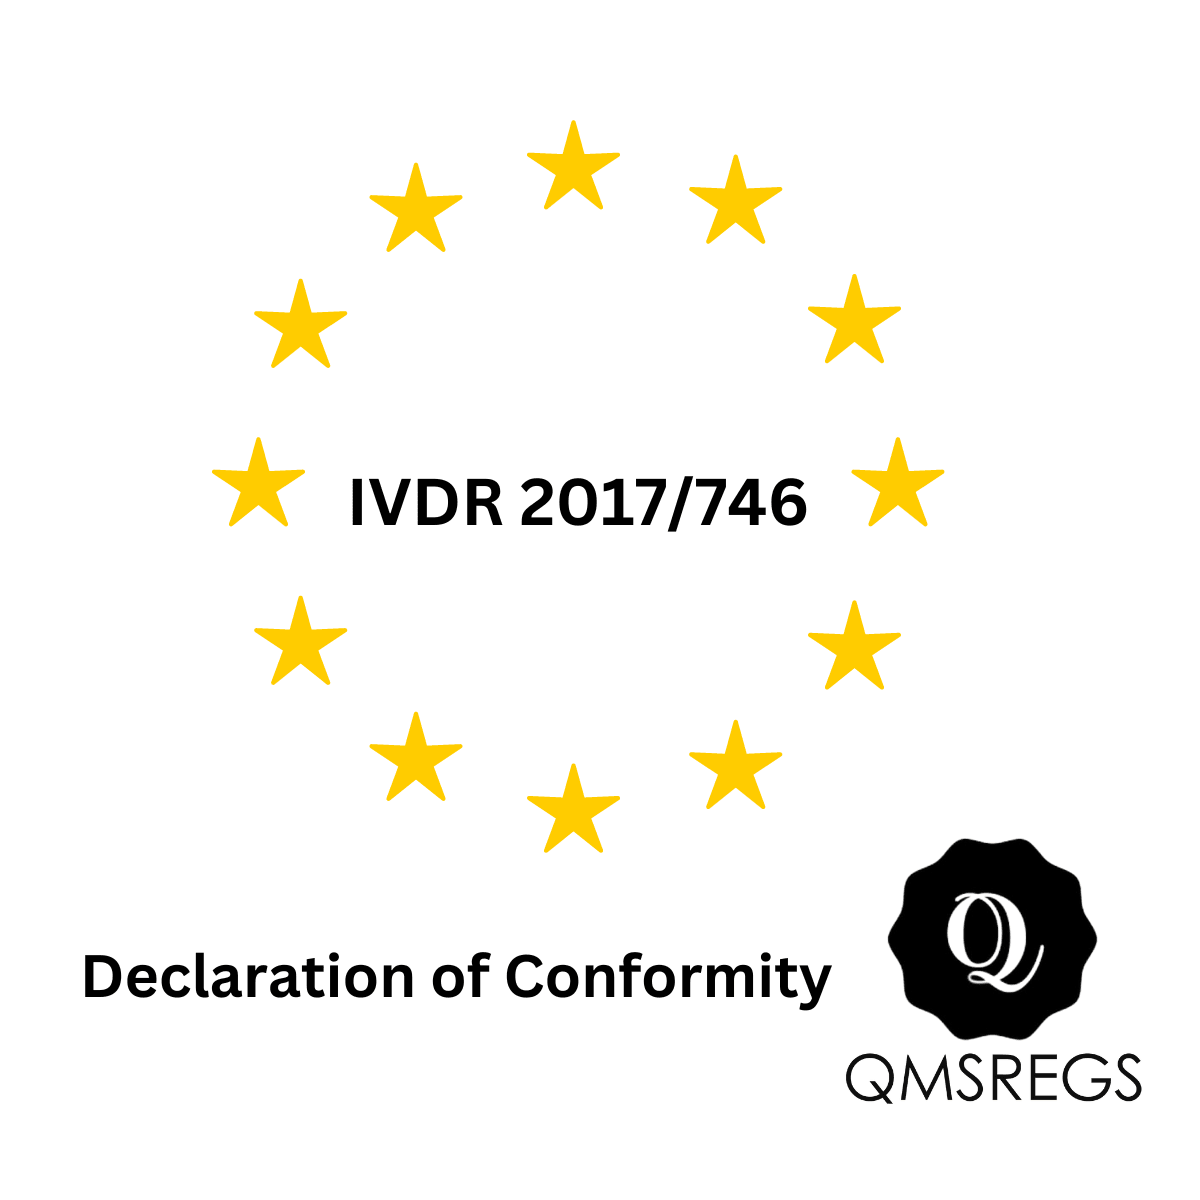 In Vitro Diagnostic Regulations 2017/746 Declaration of Conformity